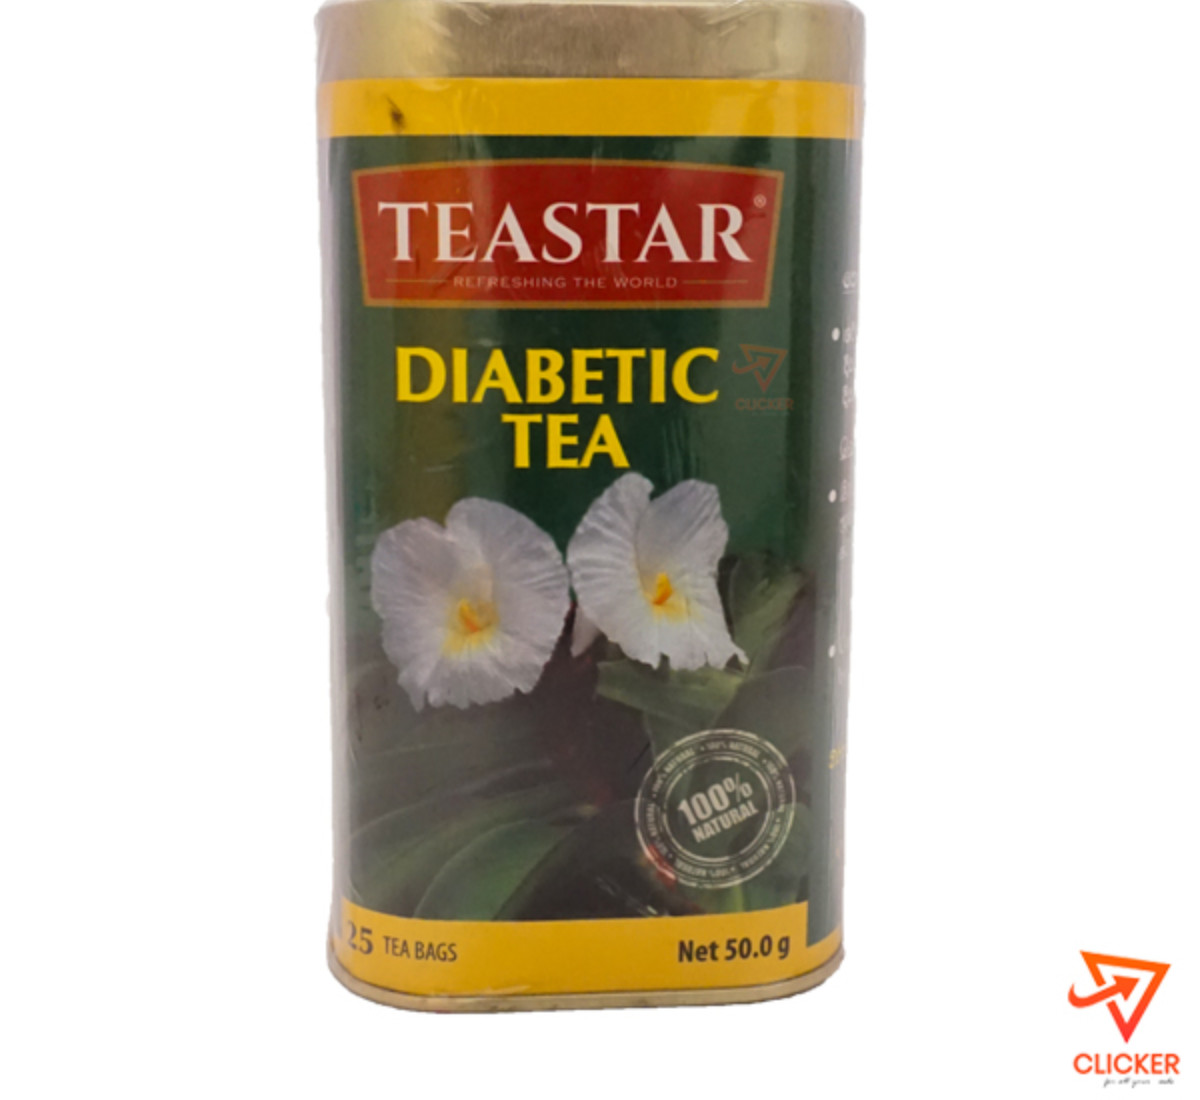 Clicker product 50g TEASTAR diabetic tea (25 tea bags) 940